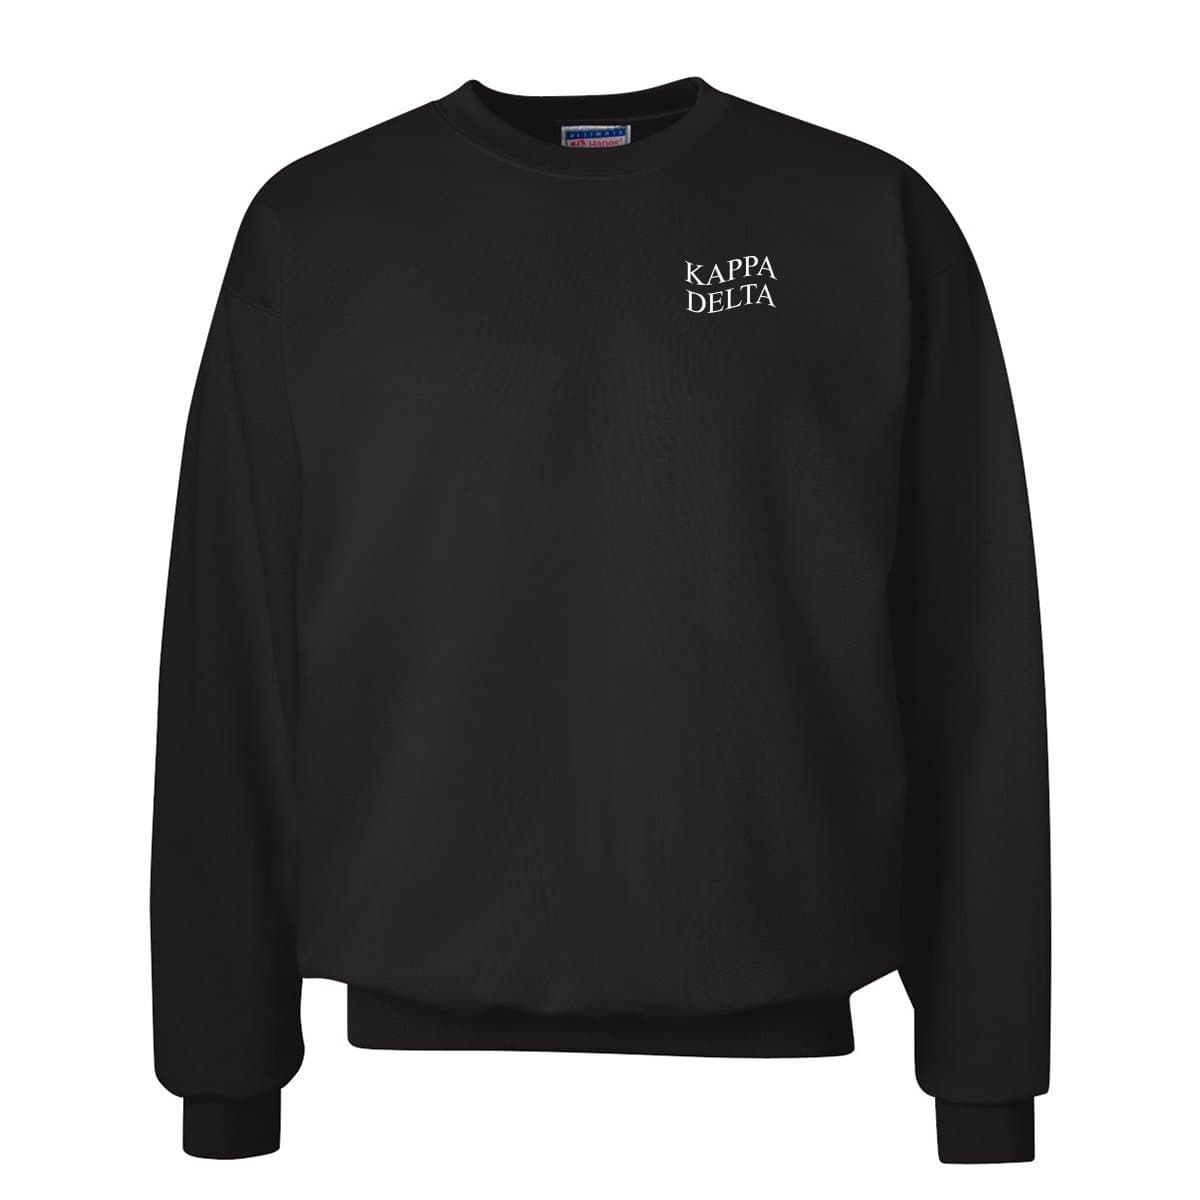 Kappa Delta Black Warped Left Chest Crewneck | Kappa Delta | Sweatshirts > Crewneck sweatshirts